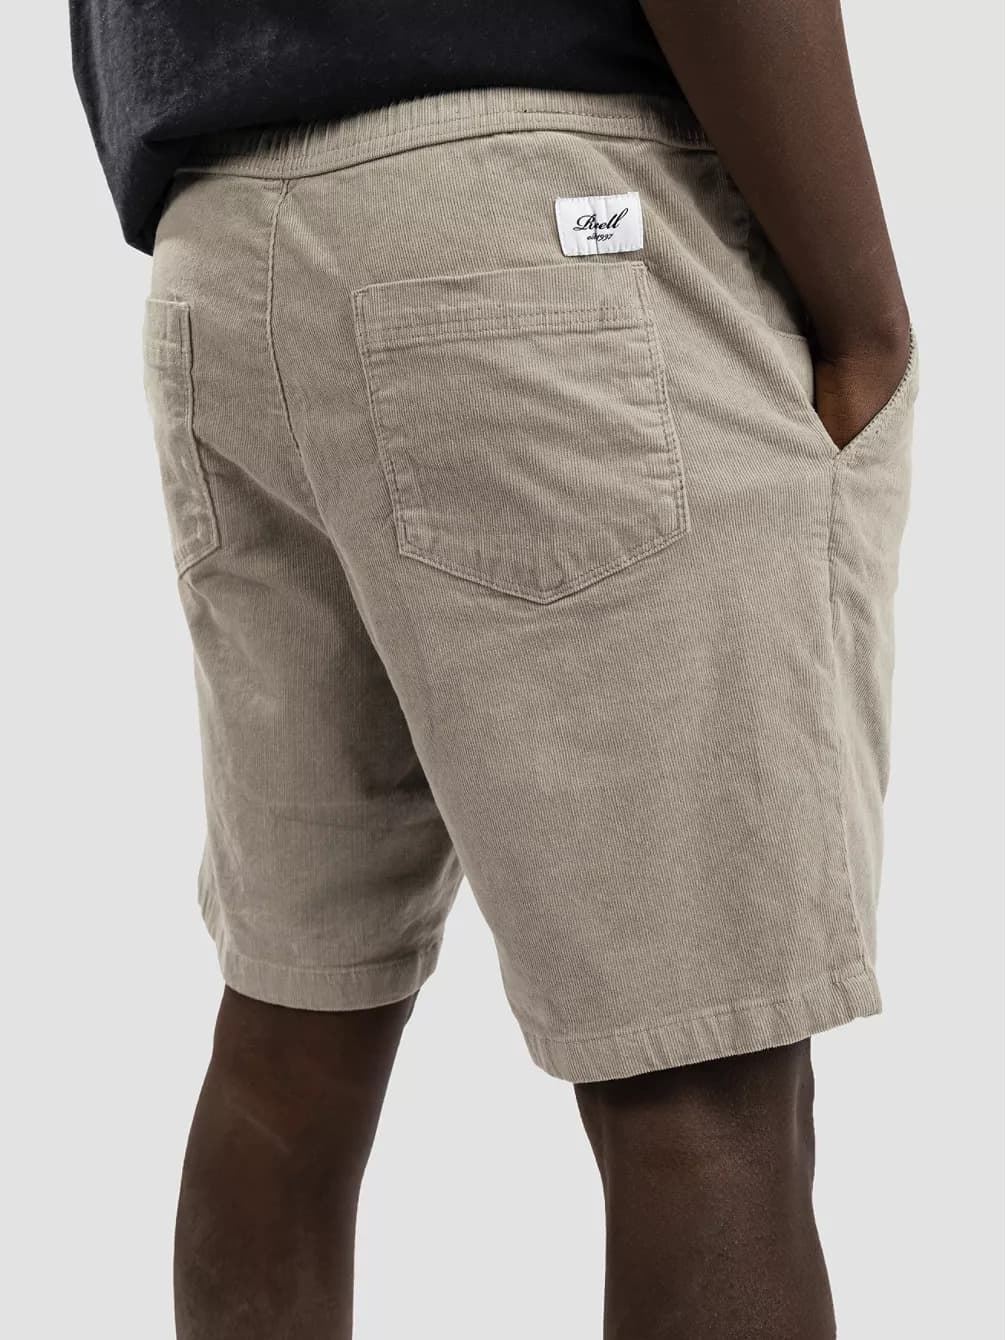 Pantalón corto REELL REFLEX EASY SHORT bay cord grey mint - Imagen 2